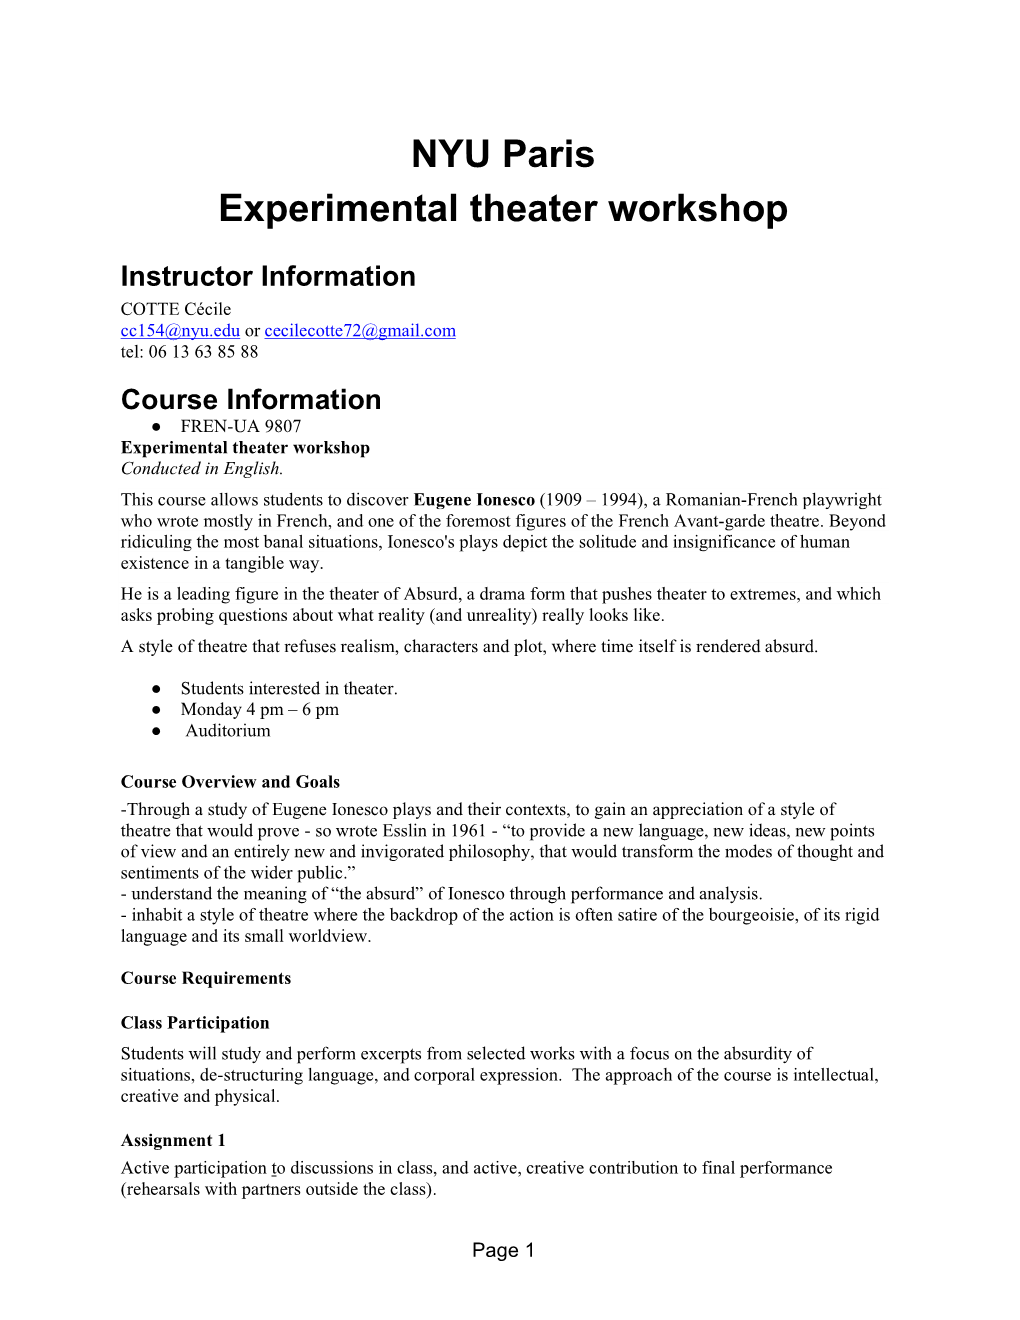 Experimental Theatre Workshop